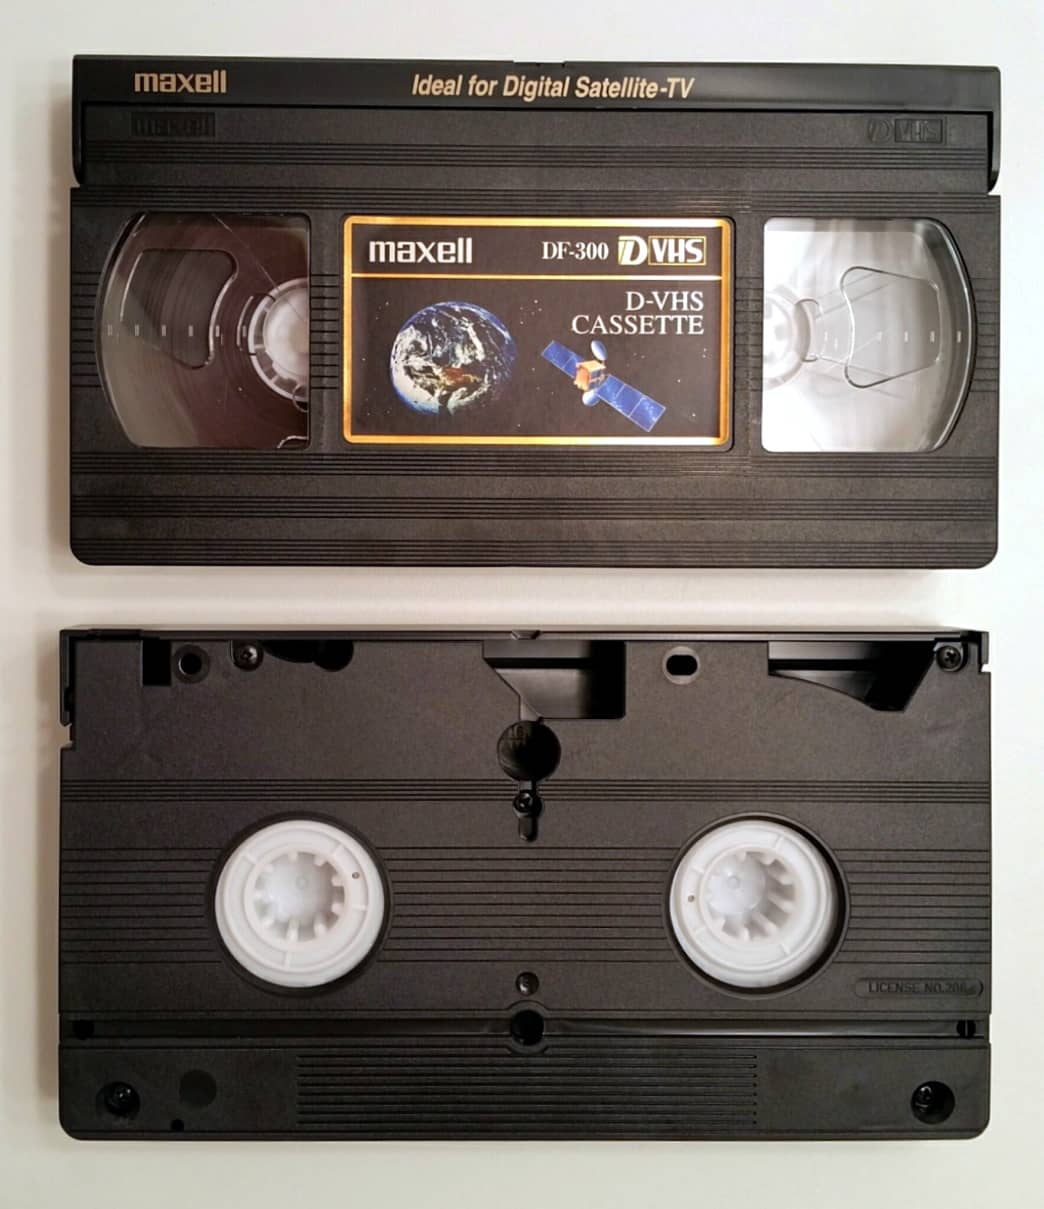 Cassette D-VHS (digital VHS)